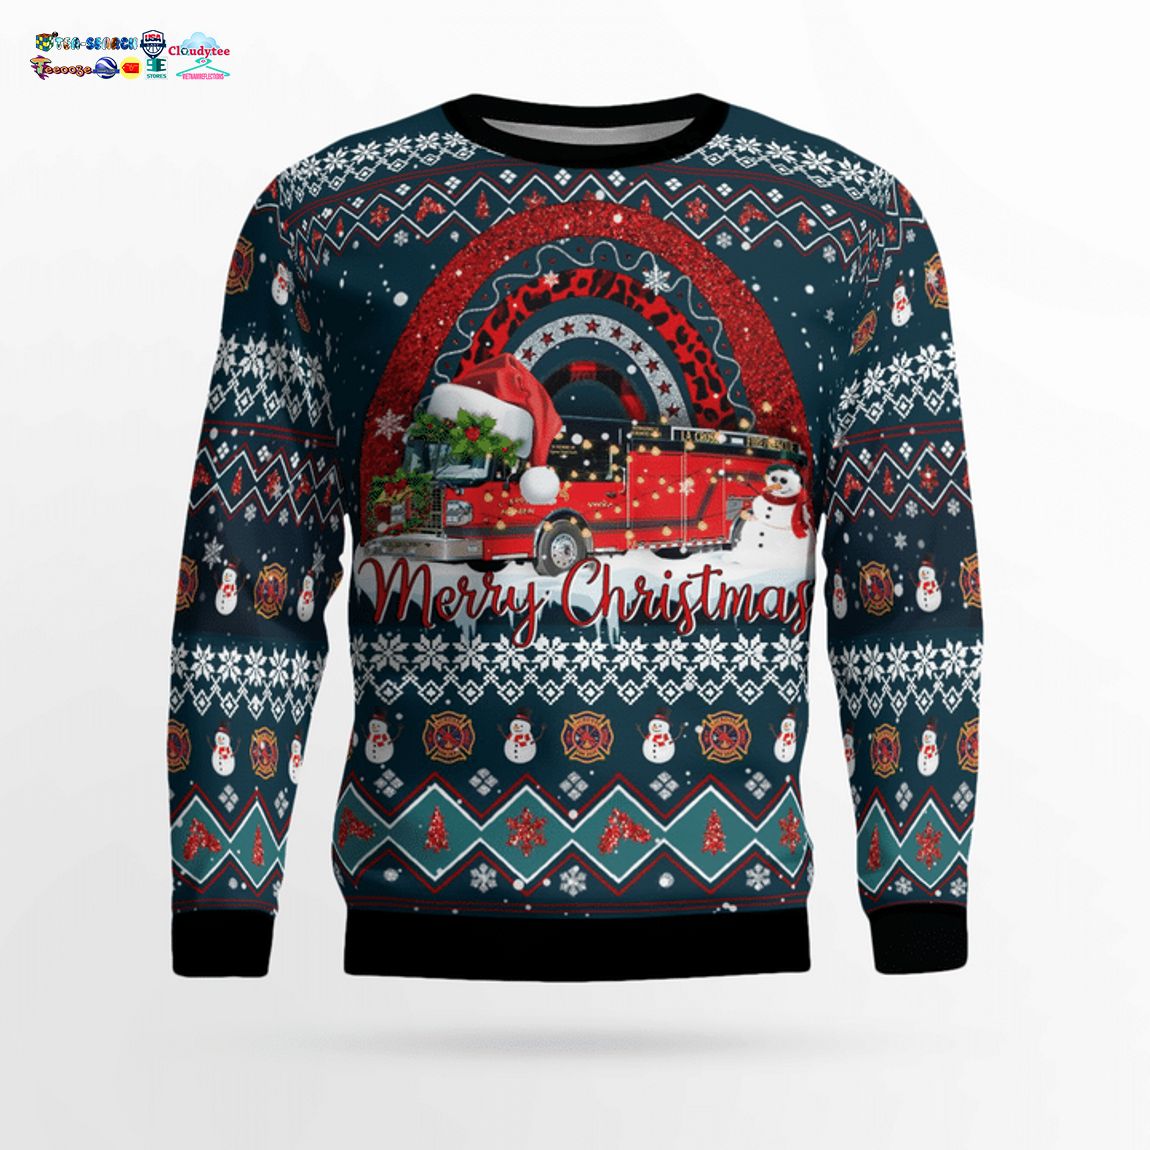 City of La Crosse Fire Department 3D Christmas Sweater